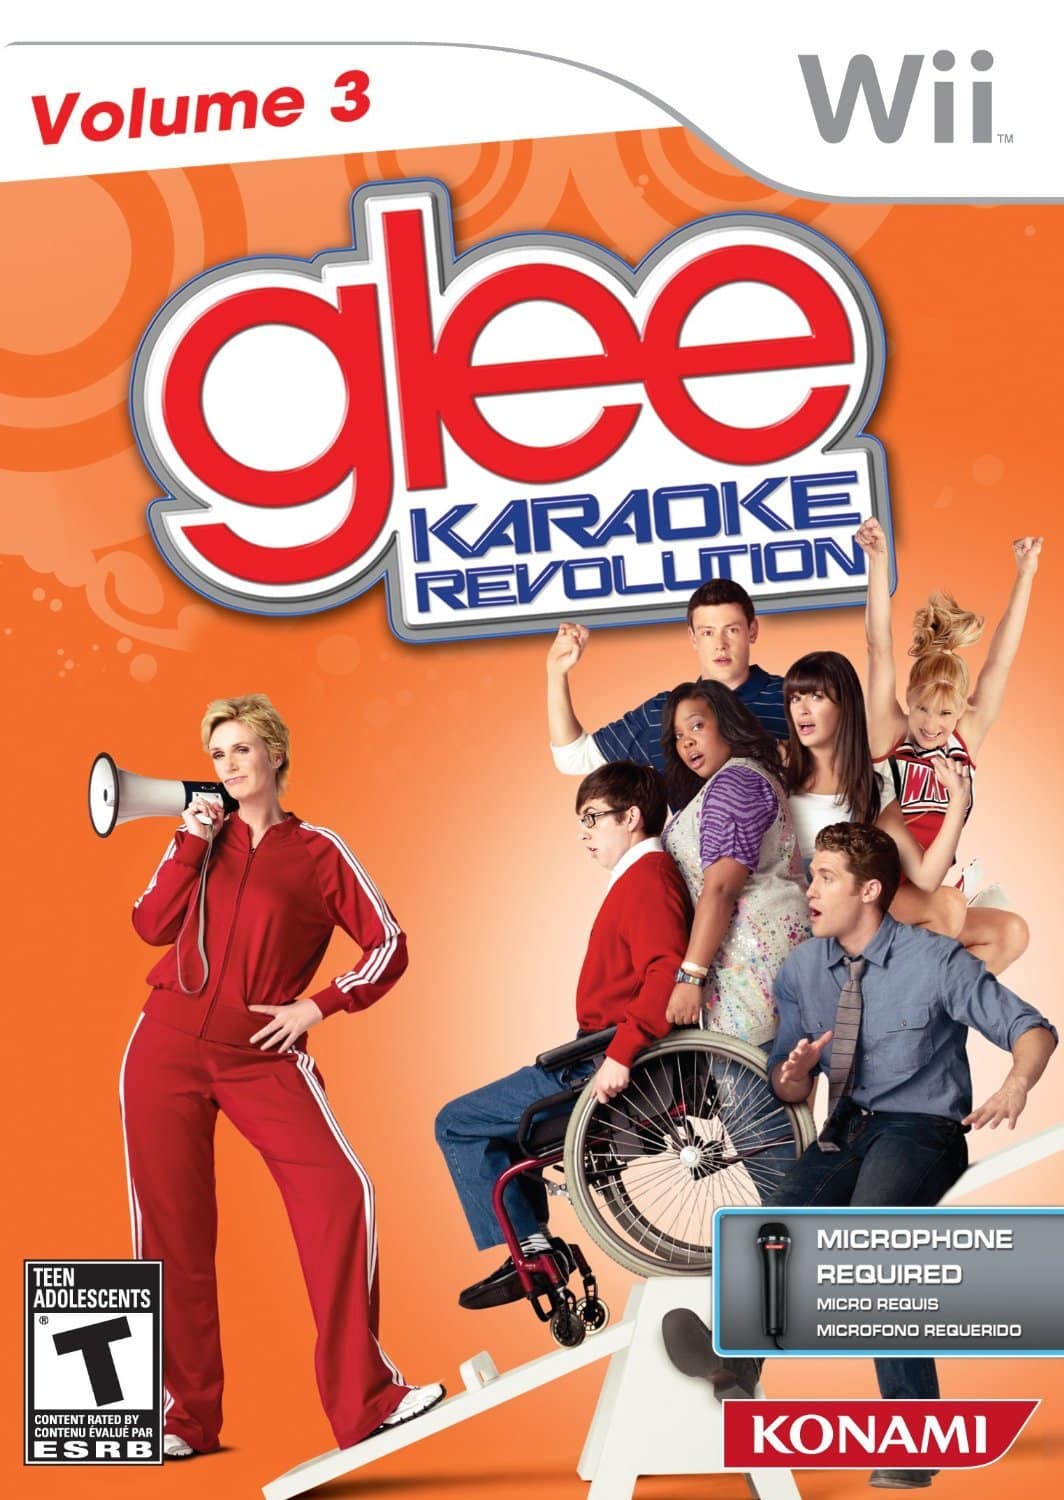 Karaoke Revolution Glee: Volume 3 player count stats